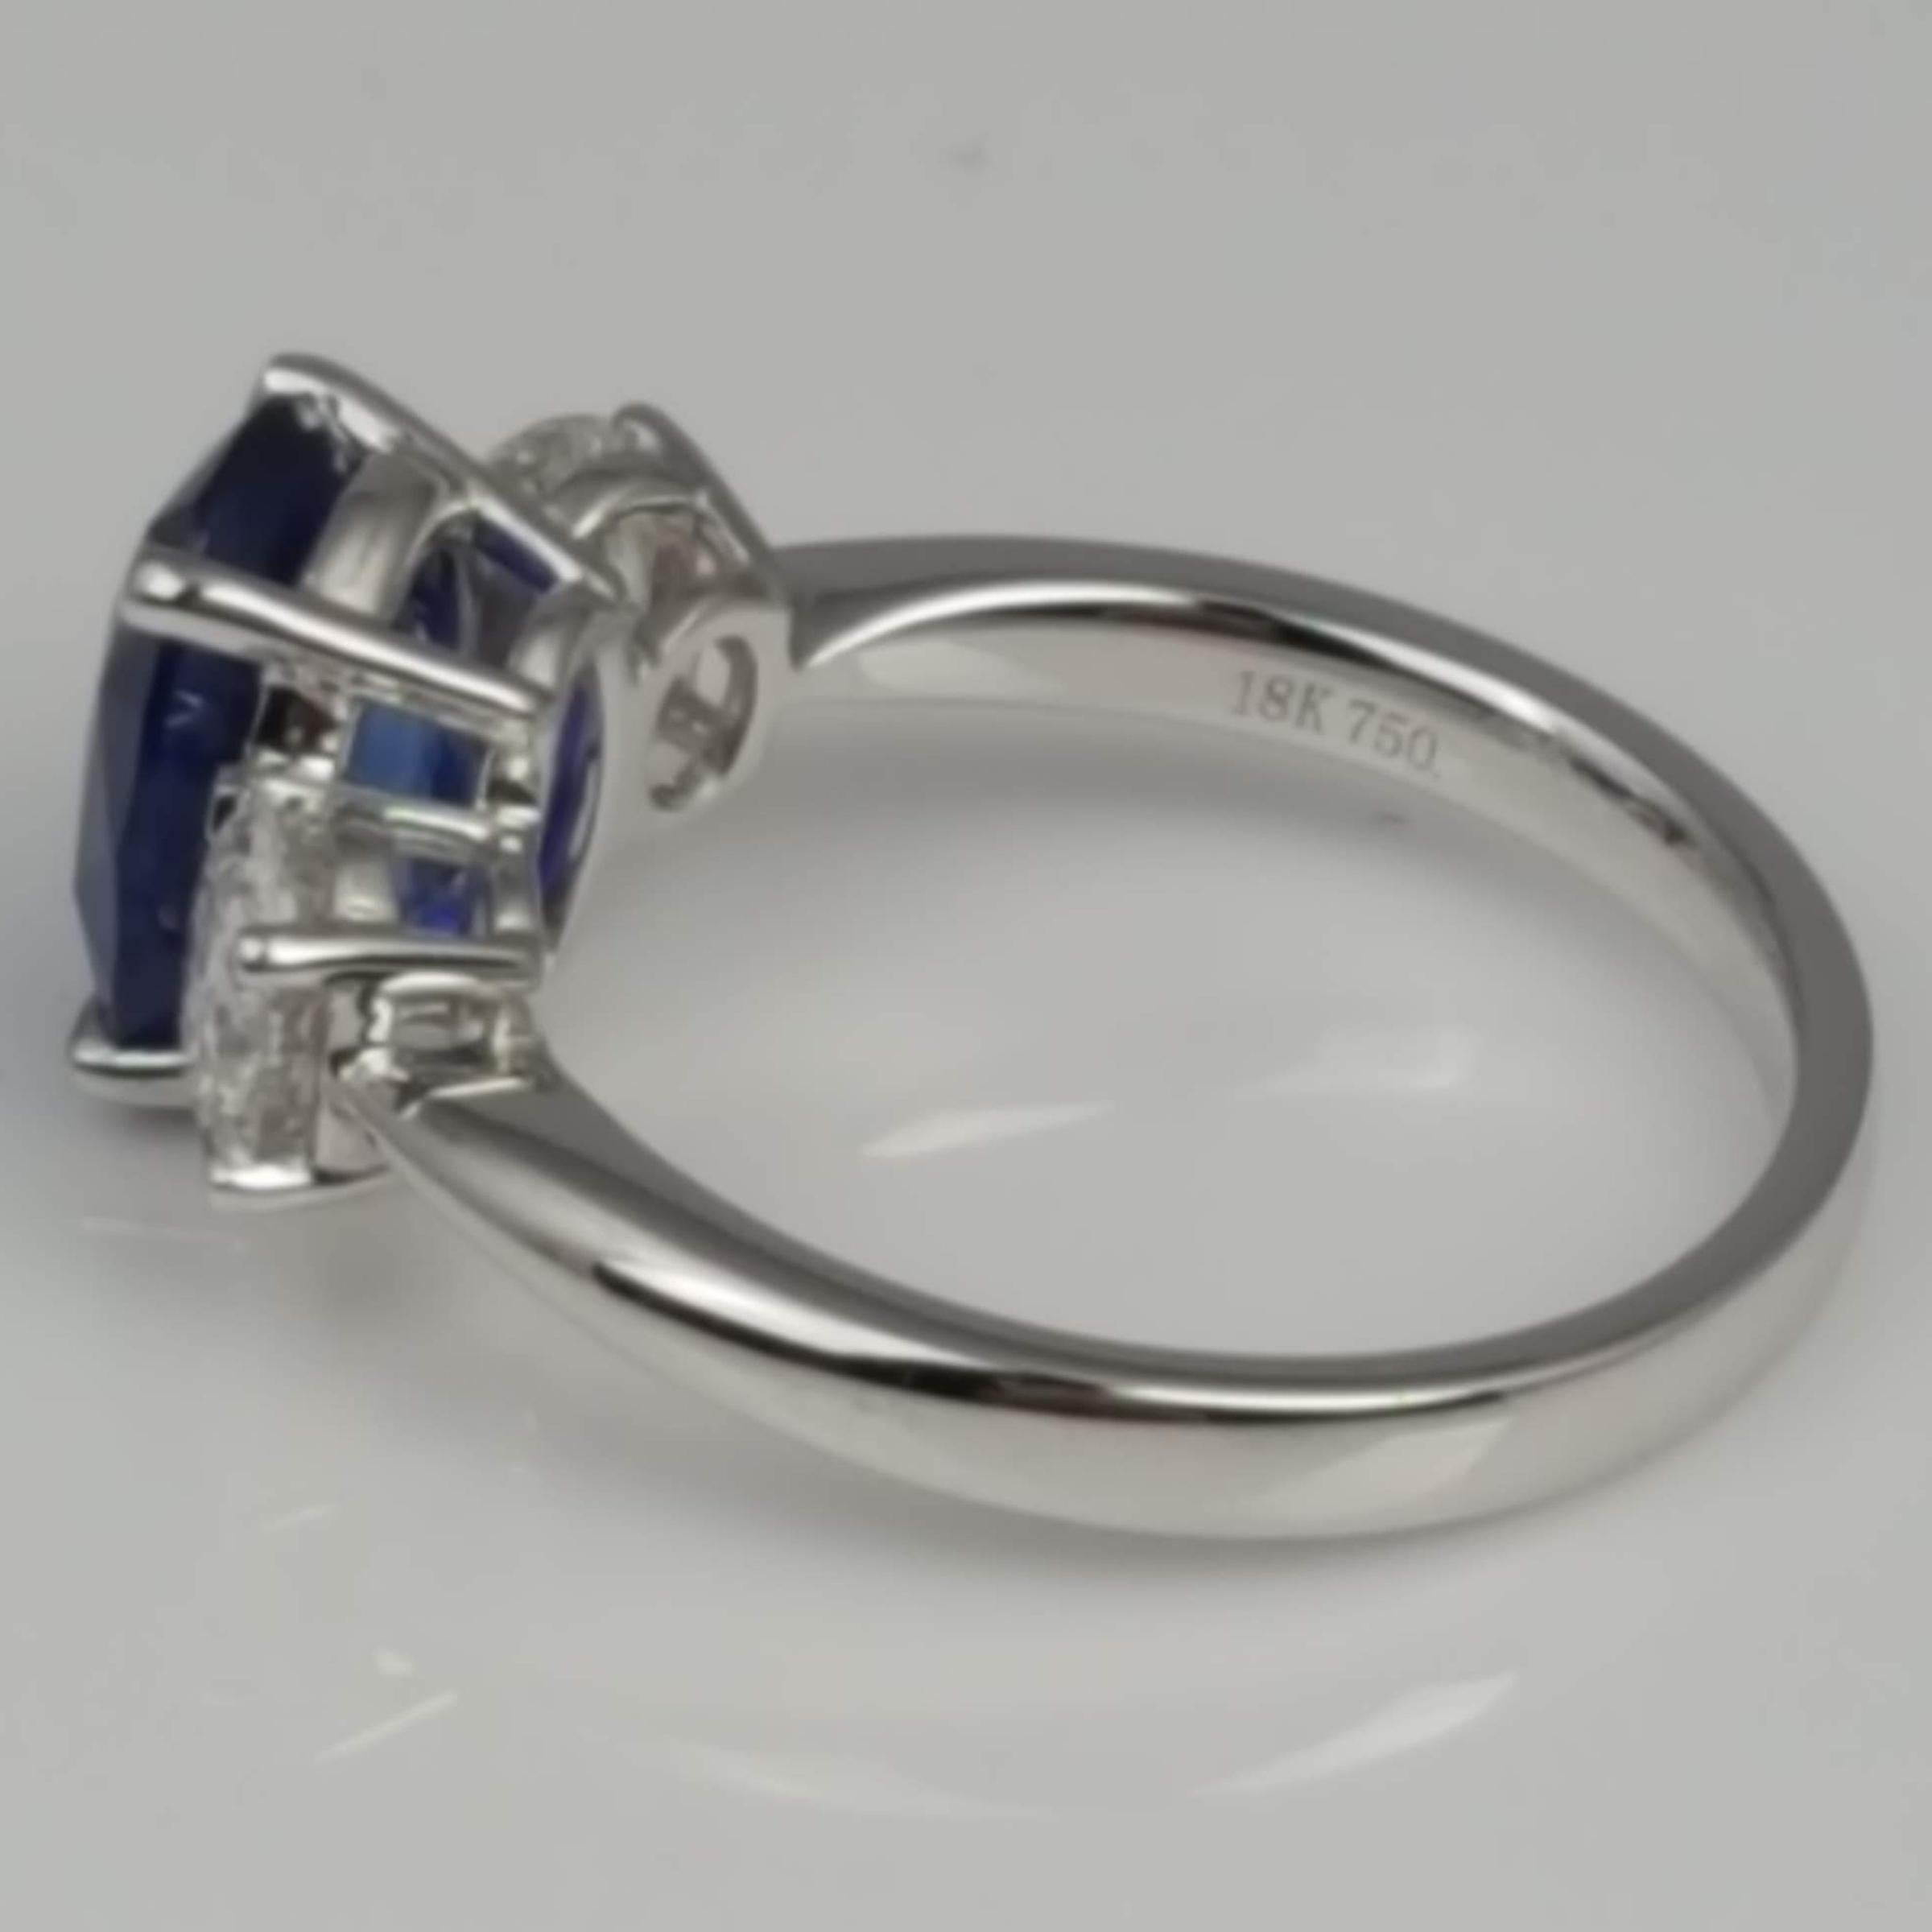 3 carat oval sapphire ring